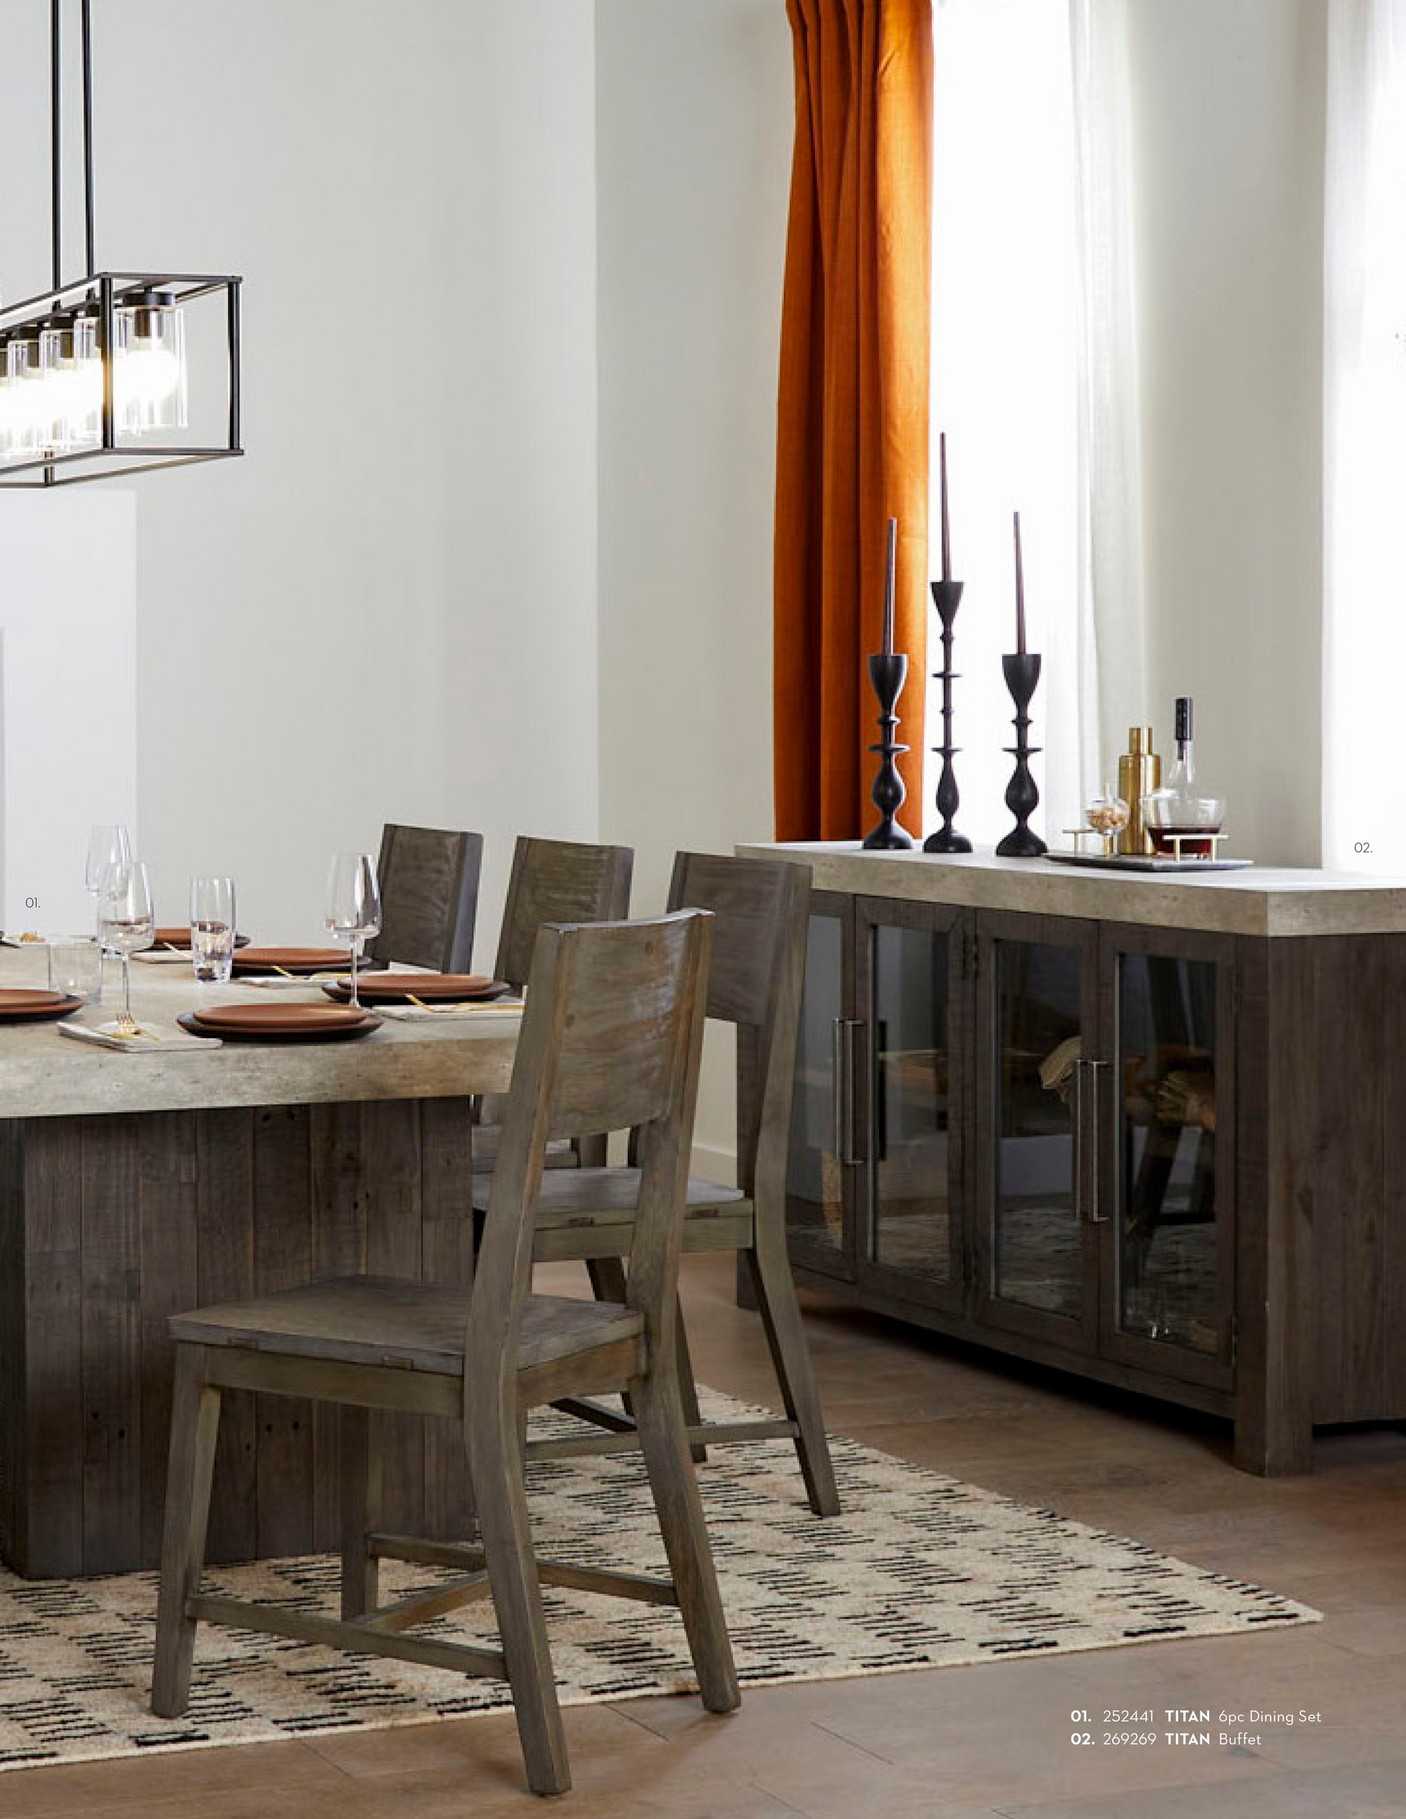 HOMN LIVING Pomago Dining Table 140 x 80 cm, Walnut Colour, Solid Wood, 140  cm (Width) 80 cm (Depth) 75 cm (Height) : : Home & Kitchen